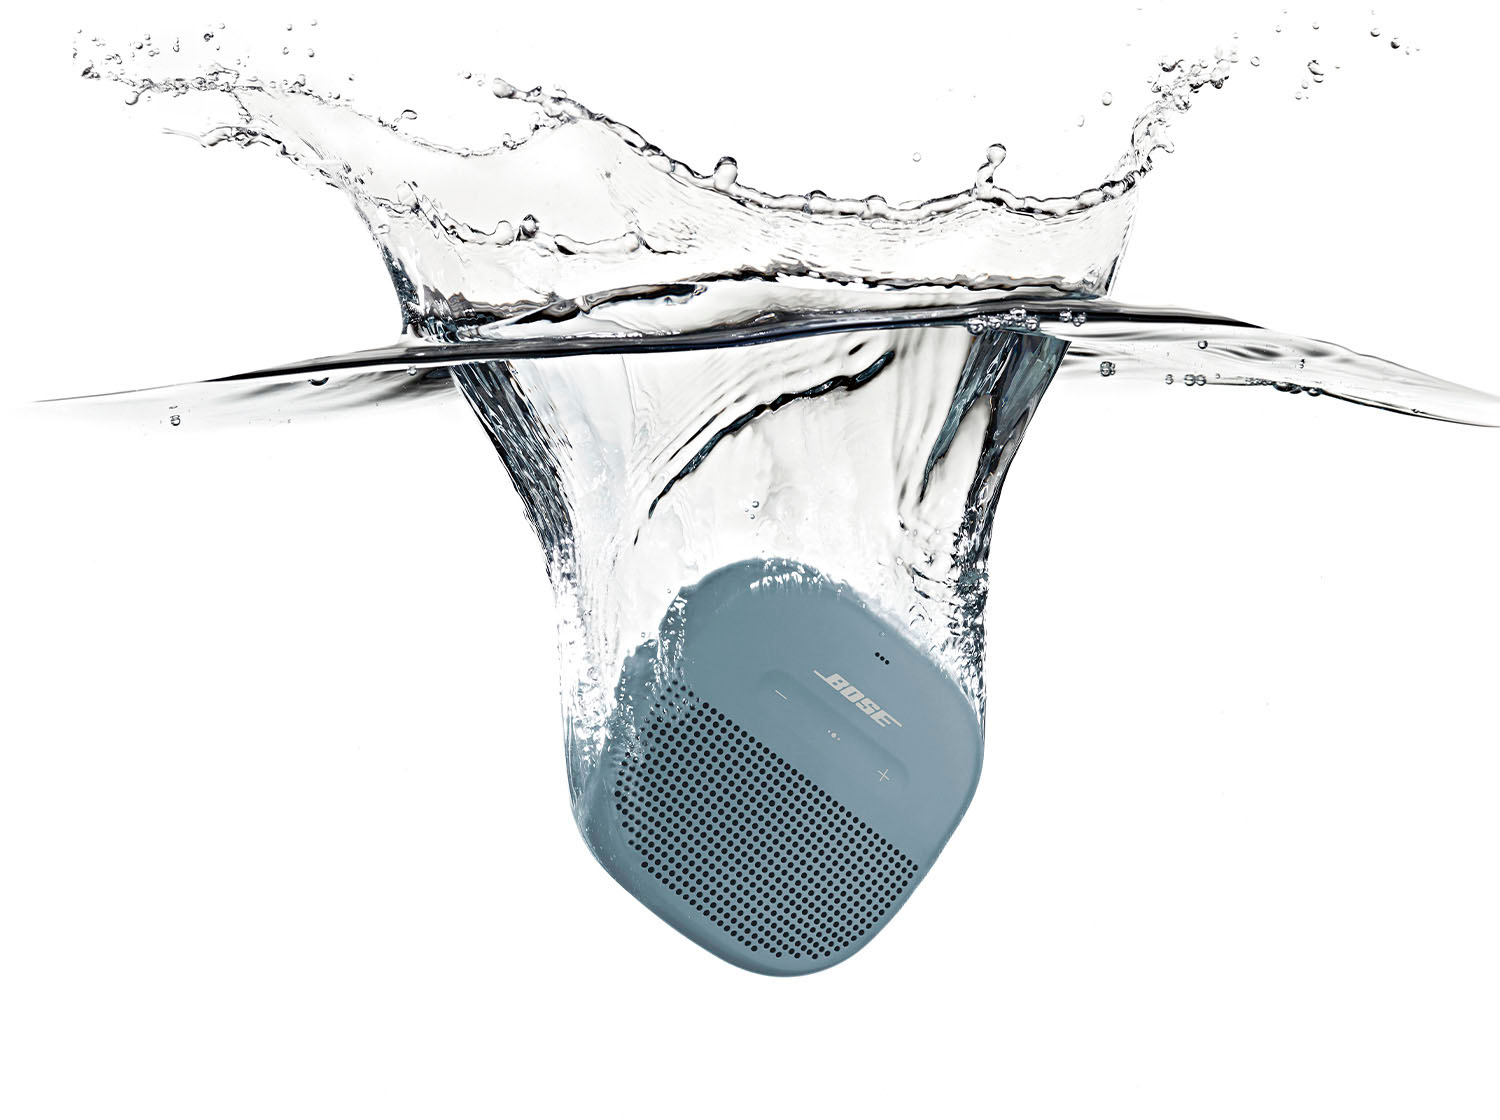 Bose SoundLink Micro Bluetooth Speaker with Waterproof in Stone Blue